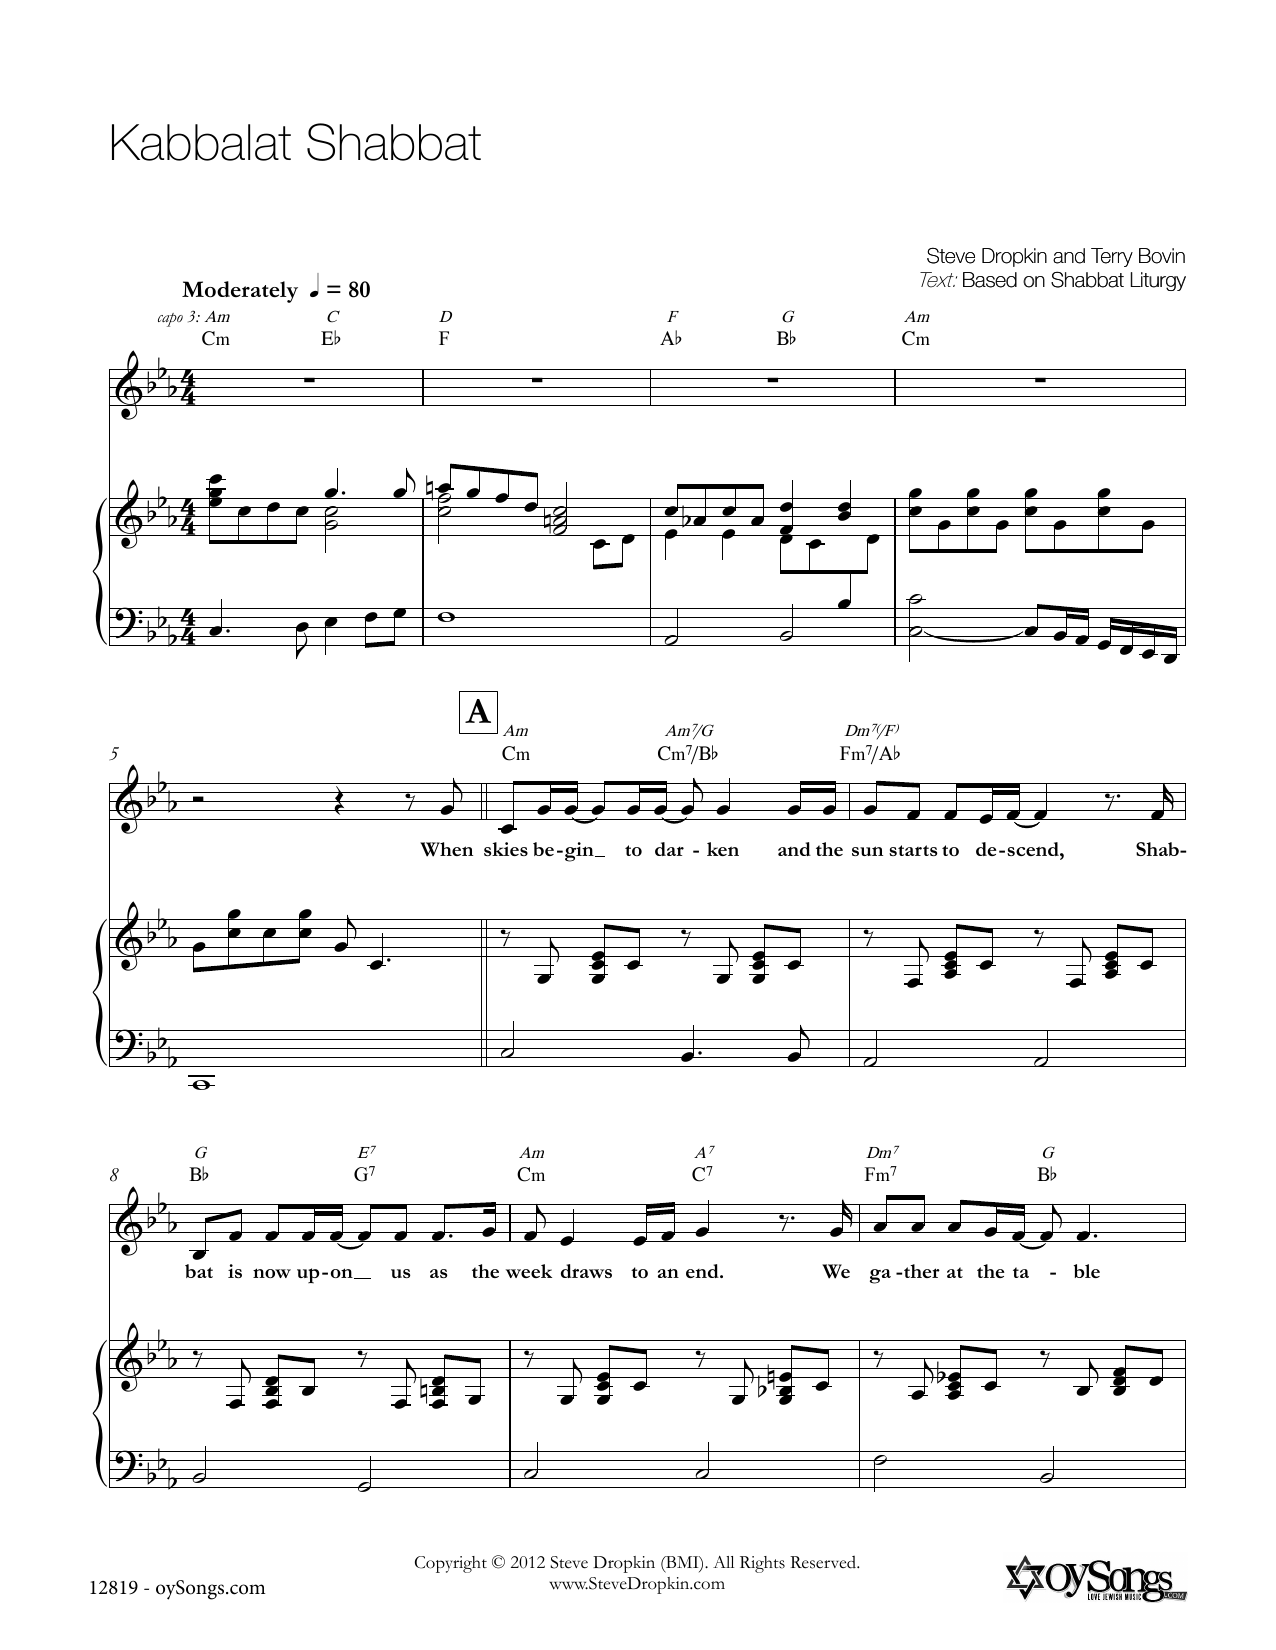 Steve Dropkin Kabbalat Shabbat Sheet Music Notes & Chords for Piano, Vocal & Guitar (Right-Hand Melody) - Download or Print PDF